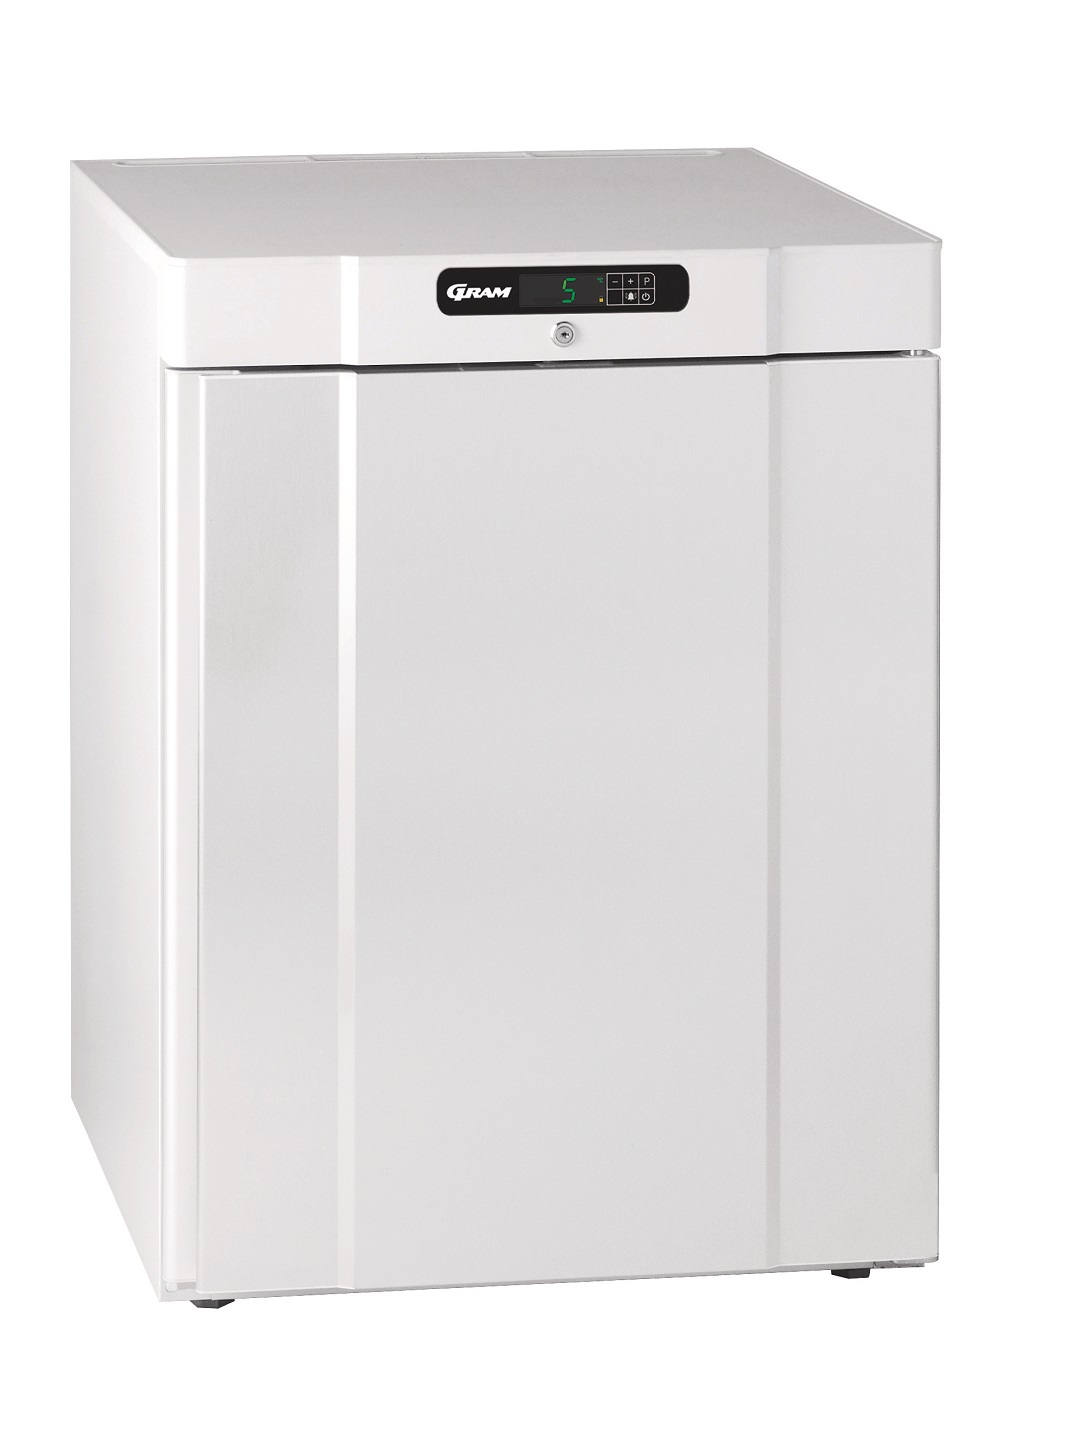 Gram Compact K 220 L - DR G U Undercounter Refrigerator (161220030)